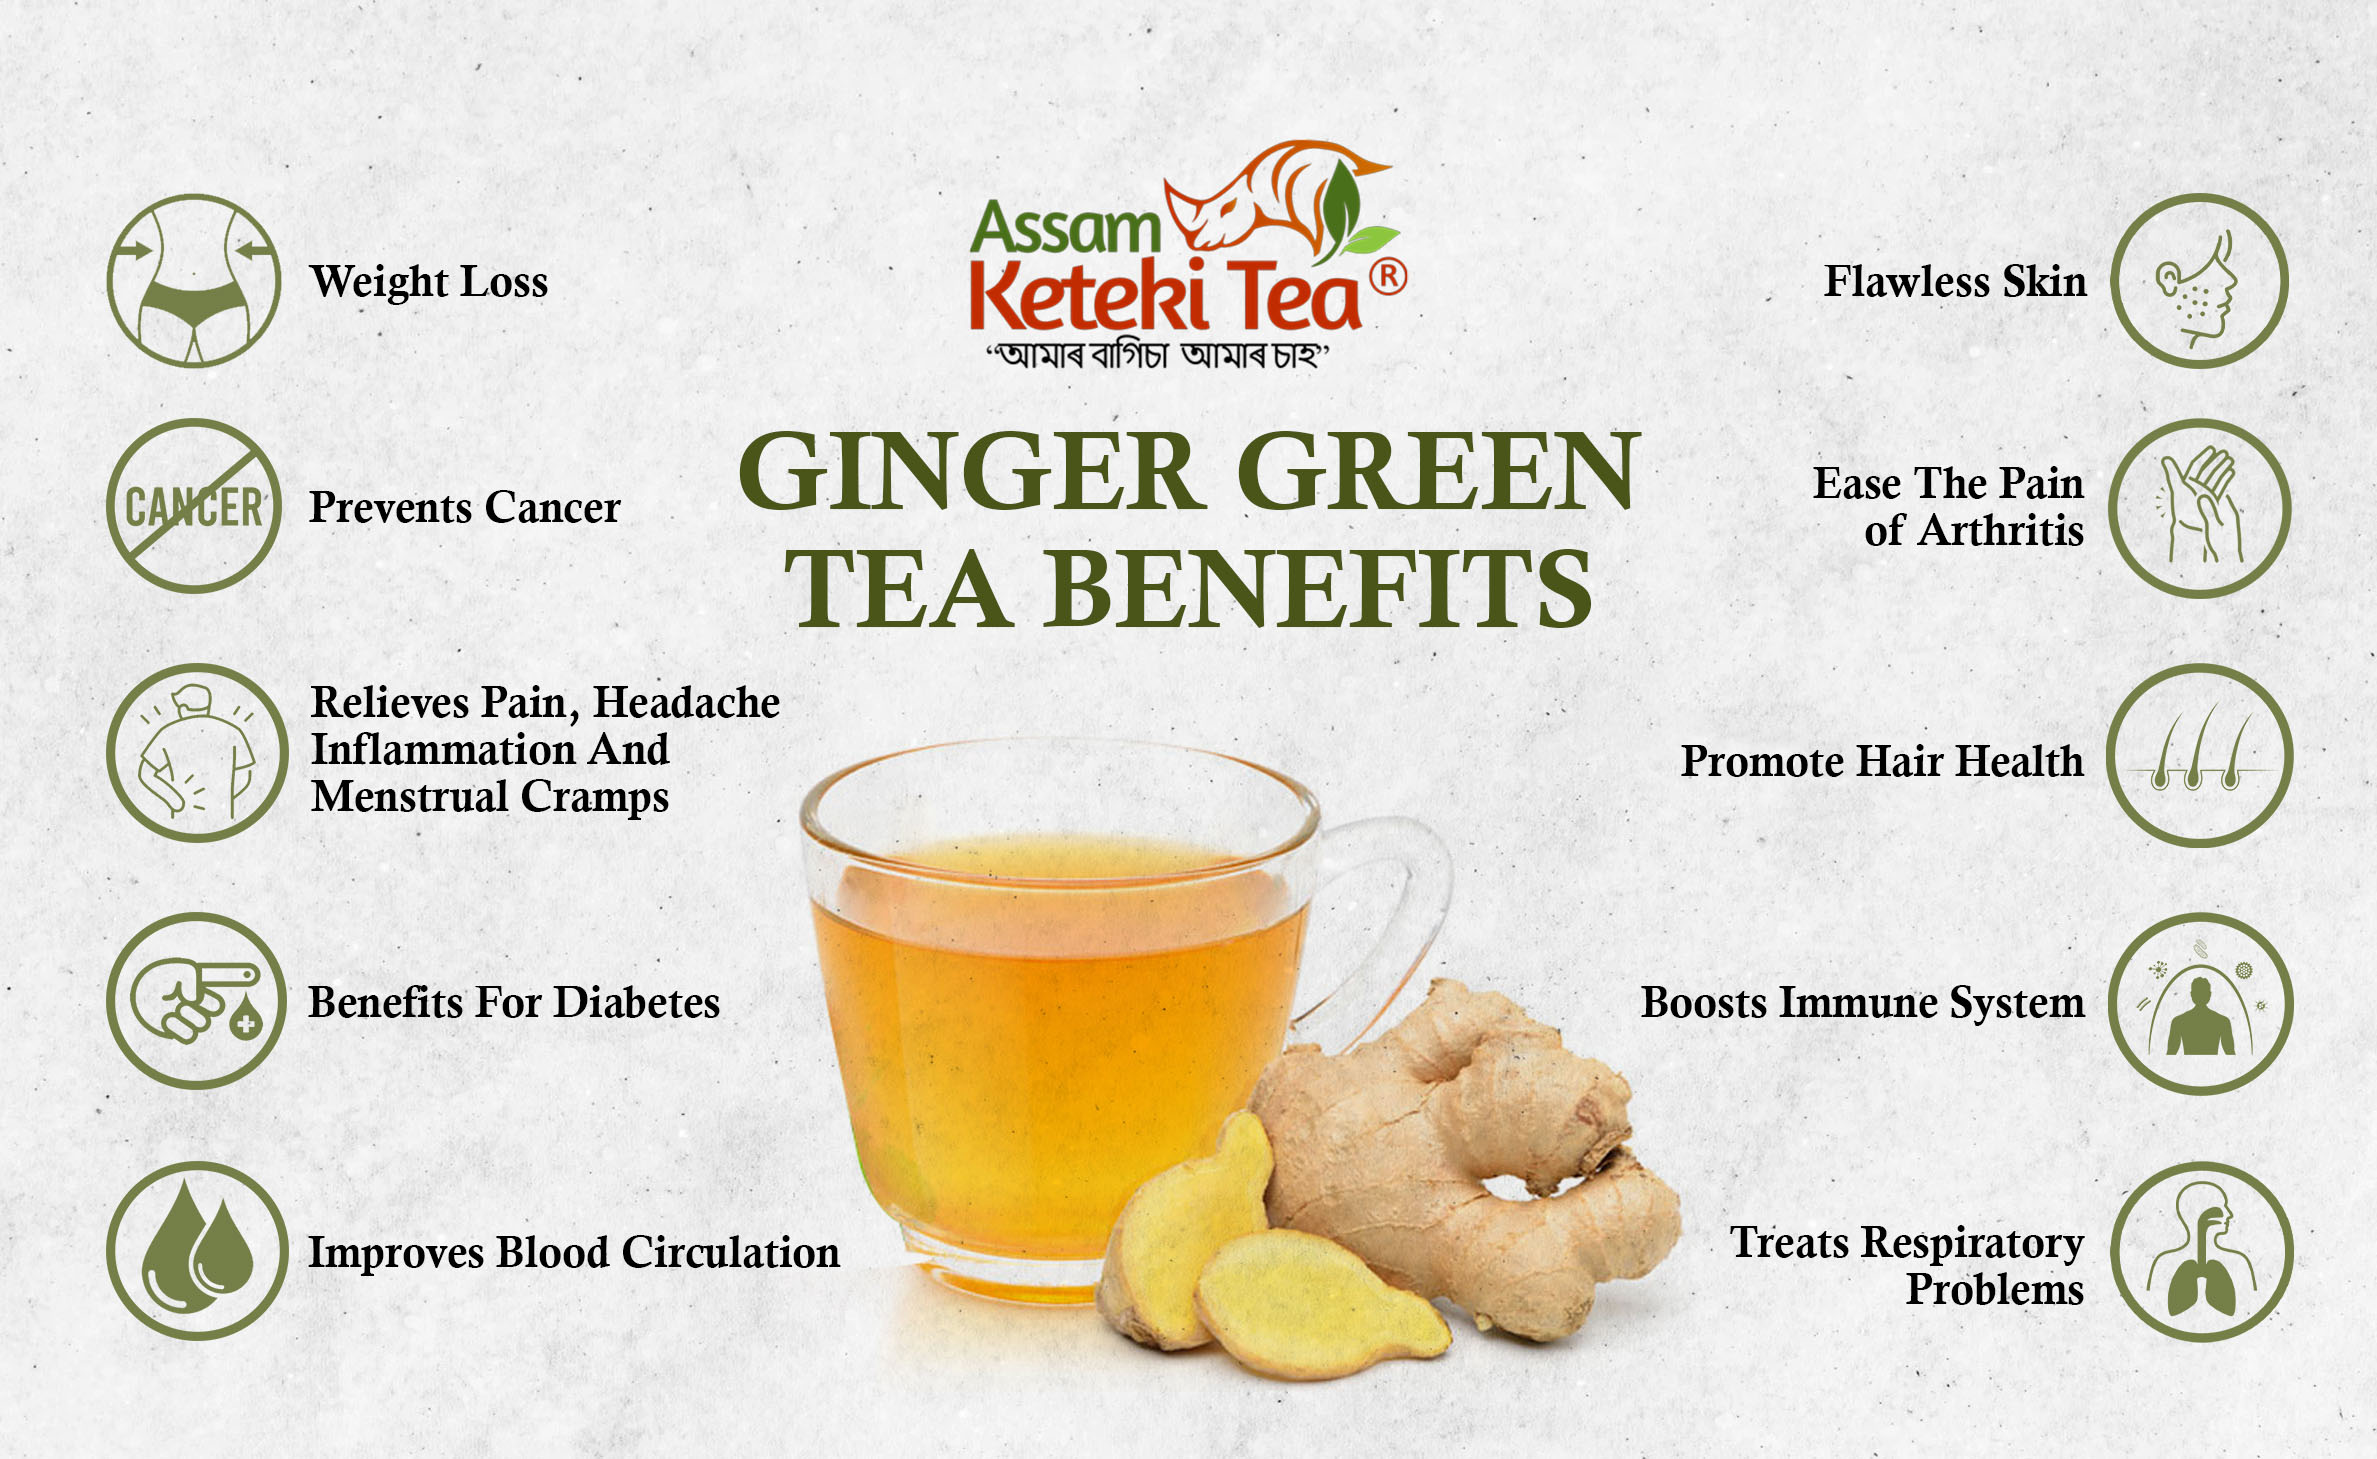 Ginger green tea benefits copy